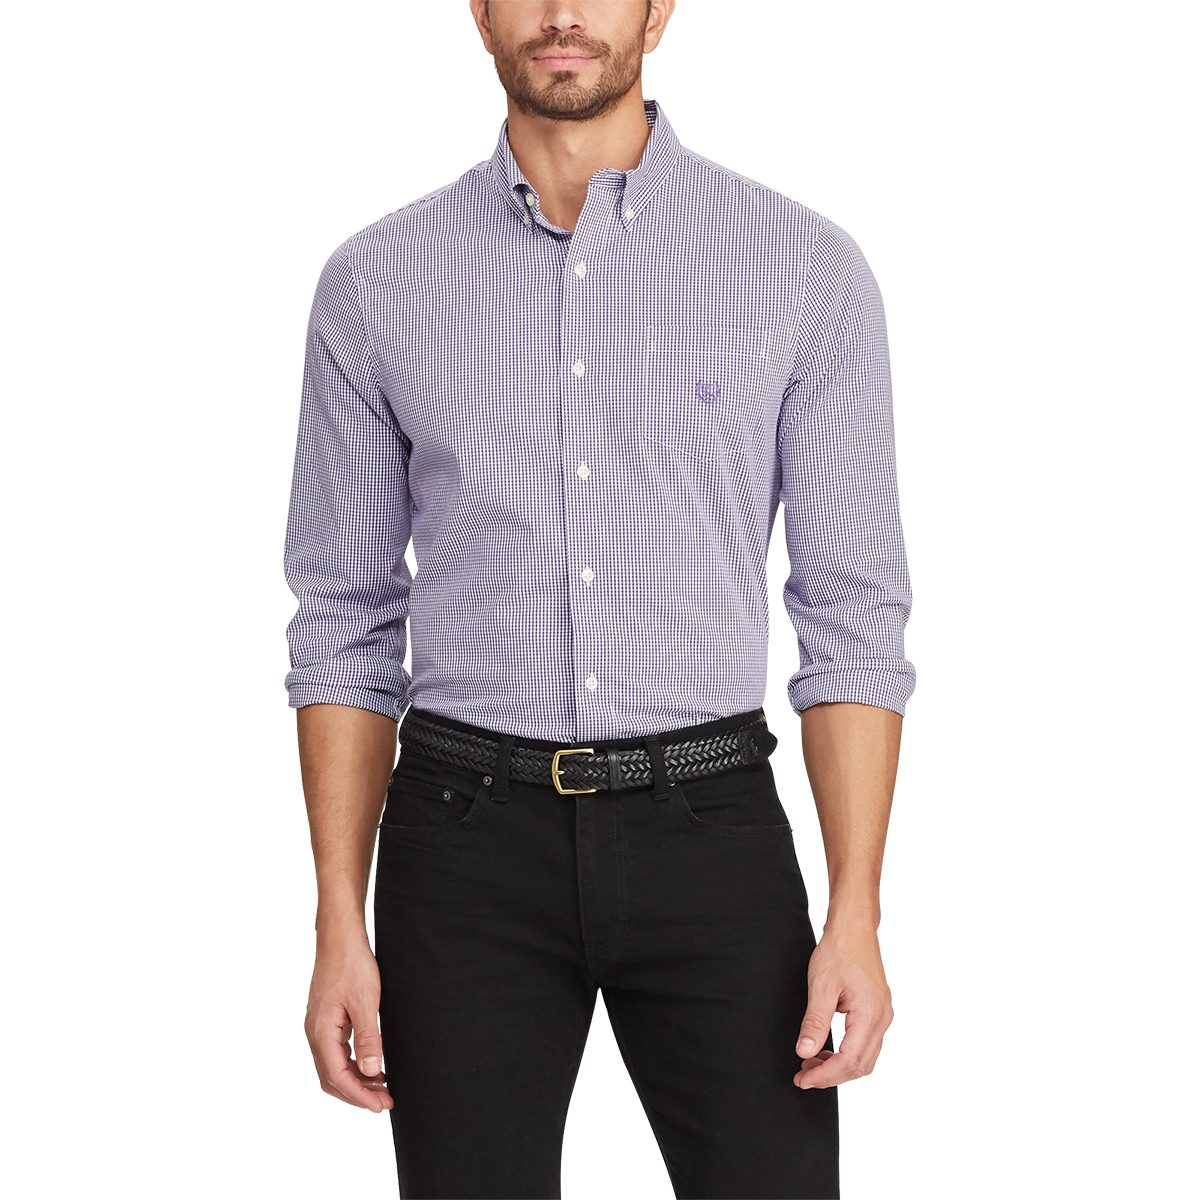 Chaps Men's Stretch Easy Care Button-Down Shirt - Purple, M